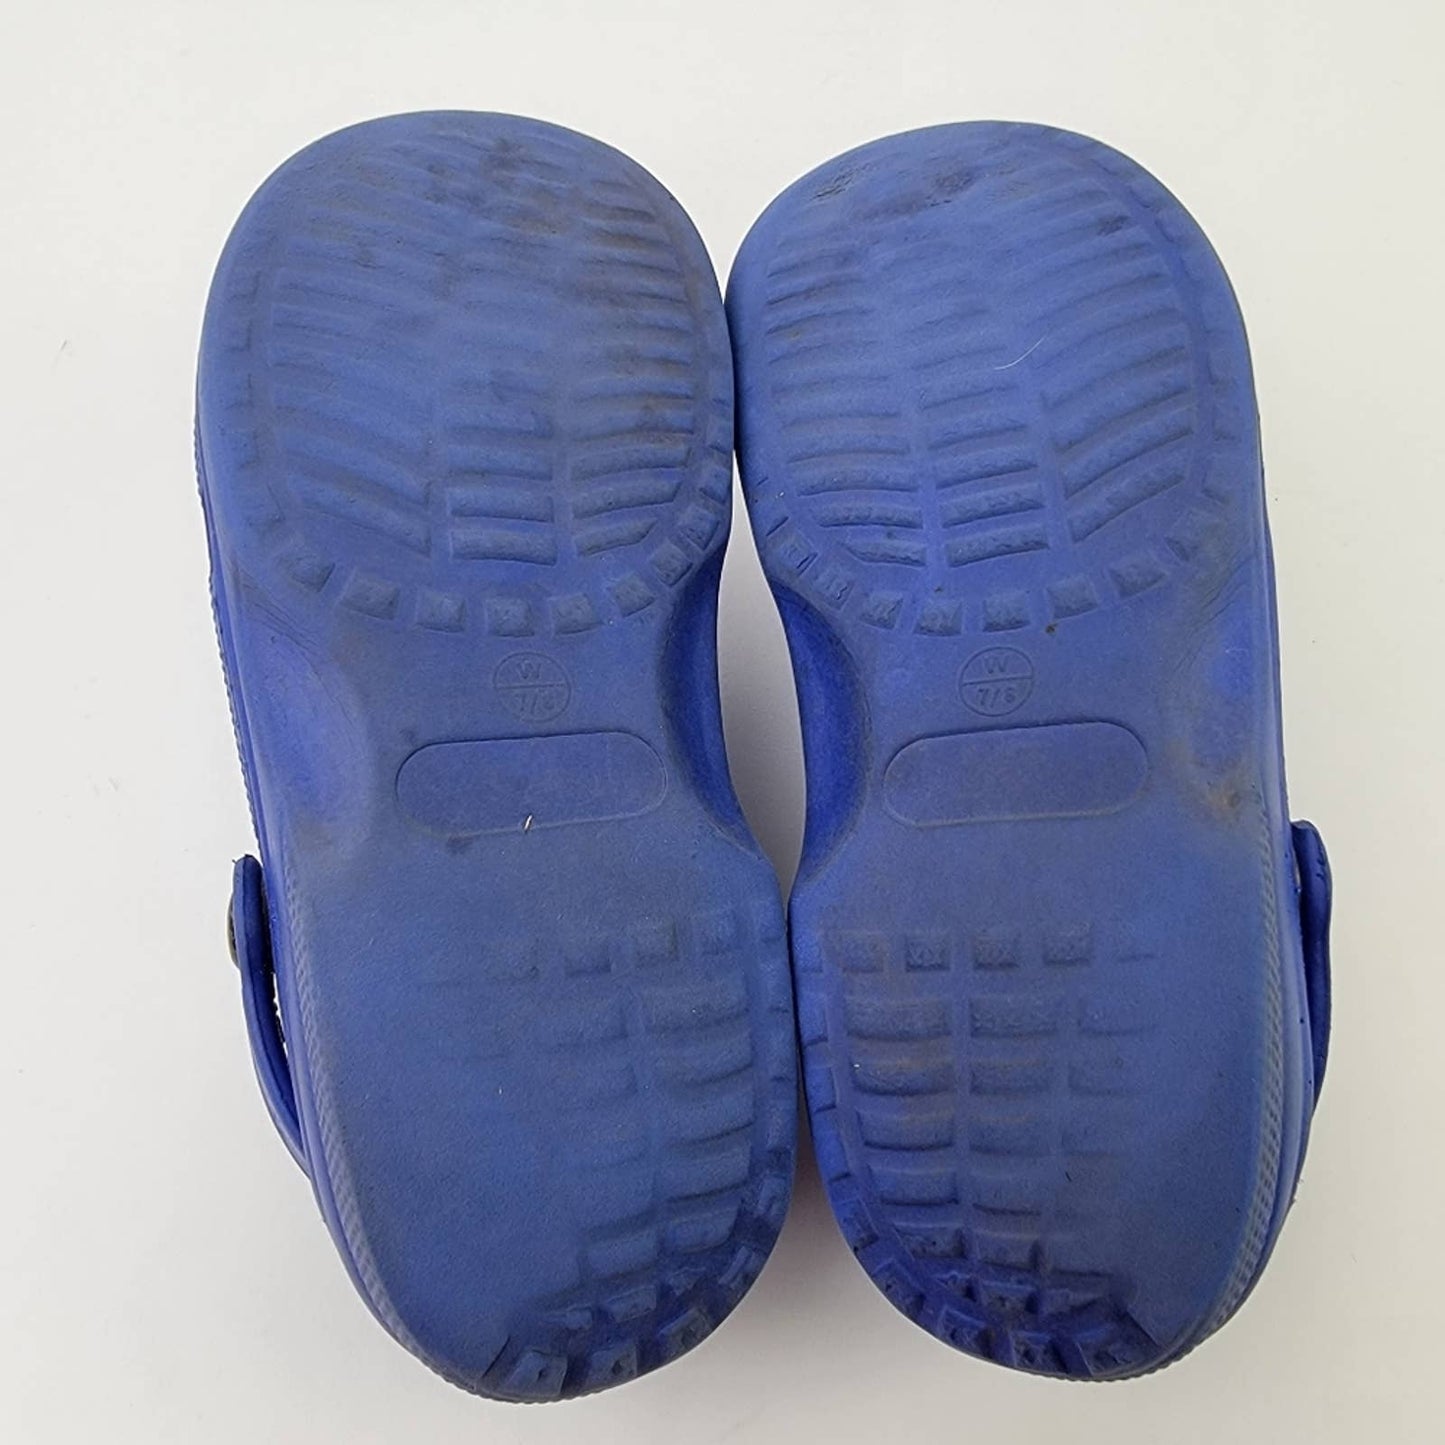 DAWGS Doggers Classic Blue Croc Shoes - 8